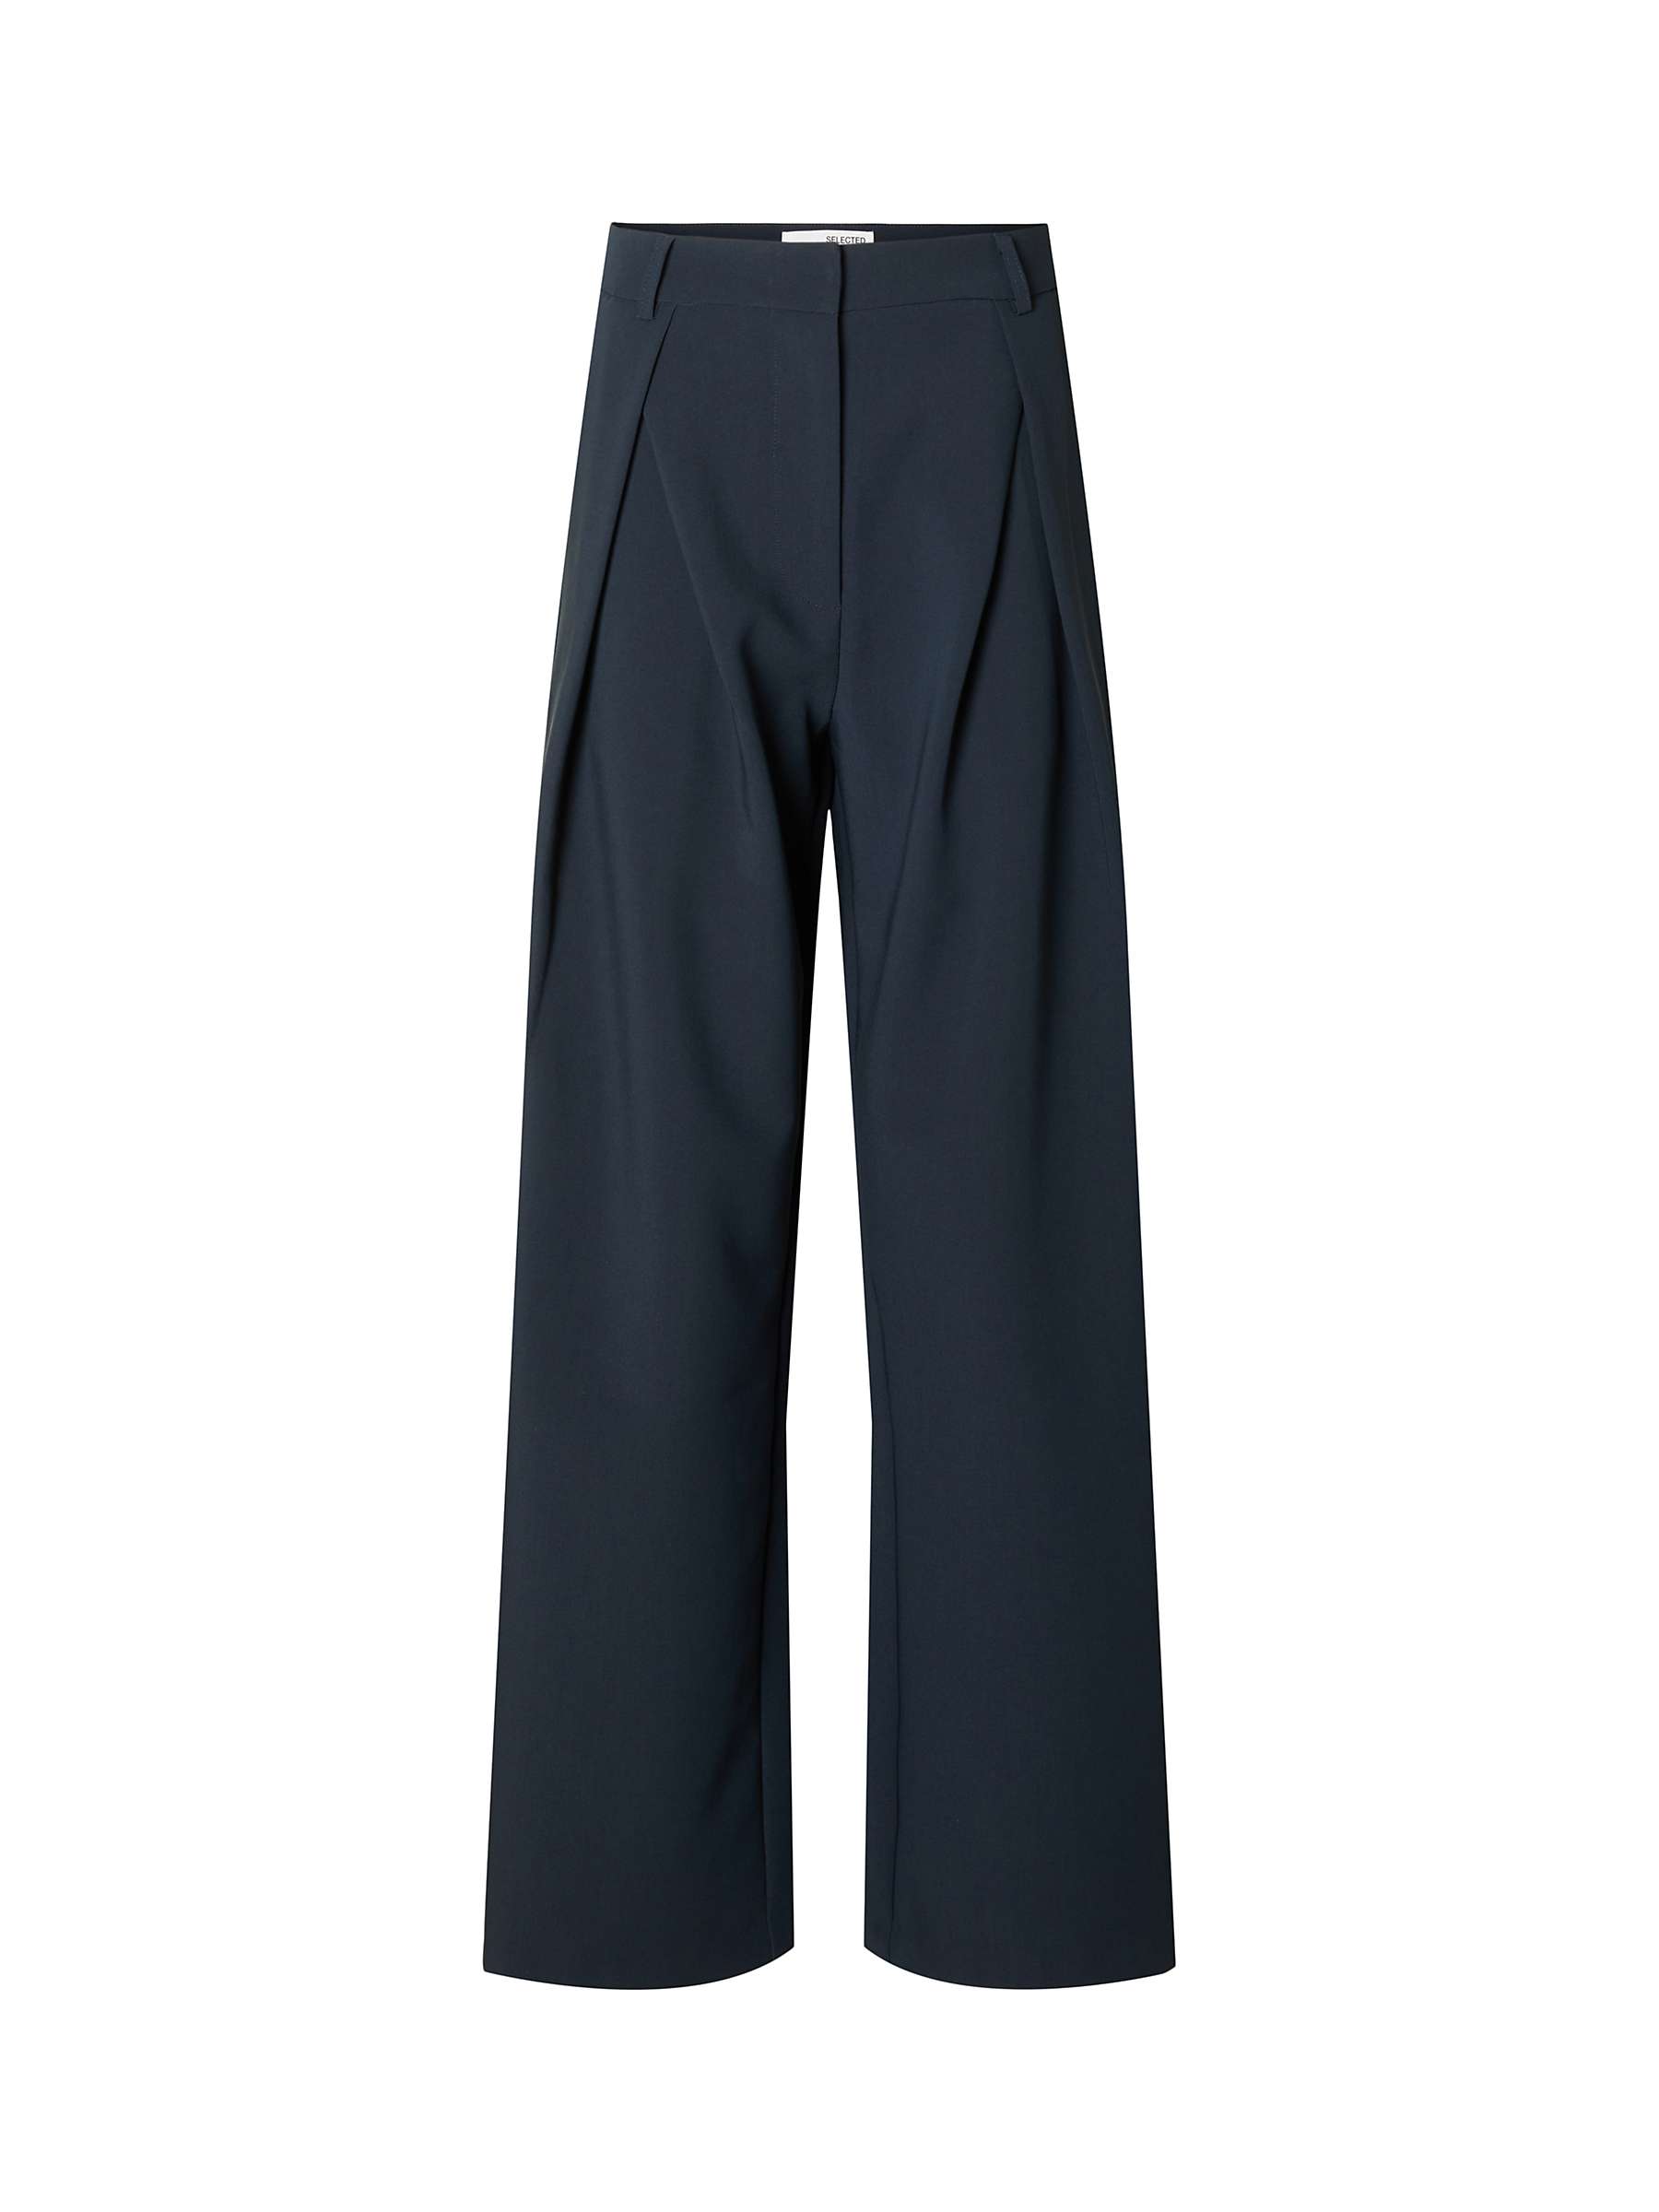 Buy SELECTED FEMME Blake High Waist Trousers, Dark Sapphire Online at johnlewis.com